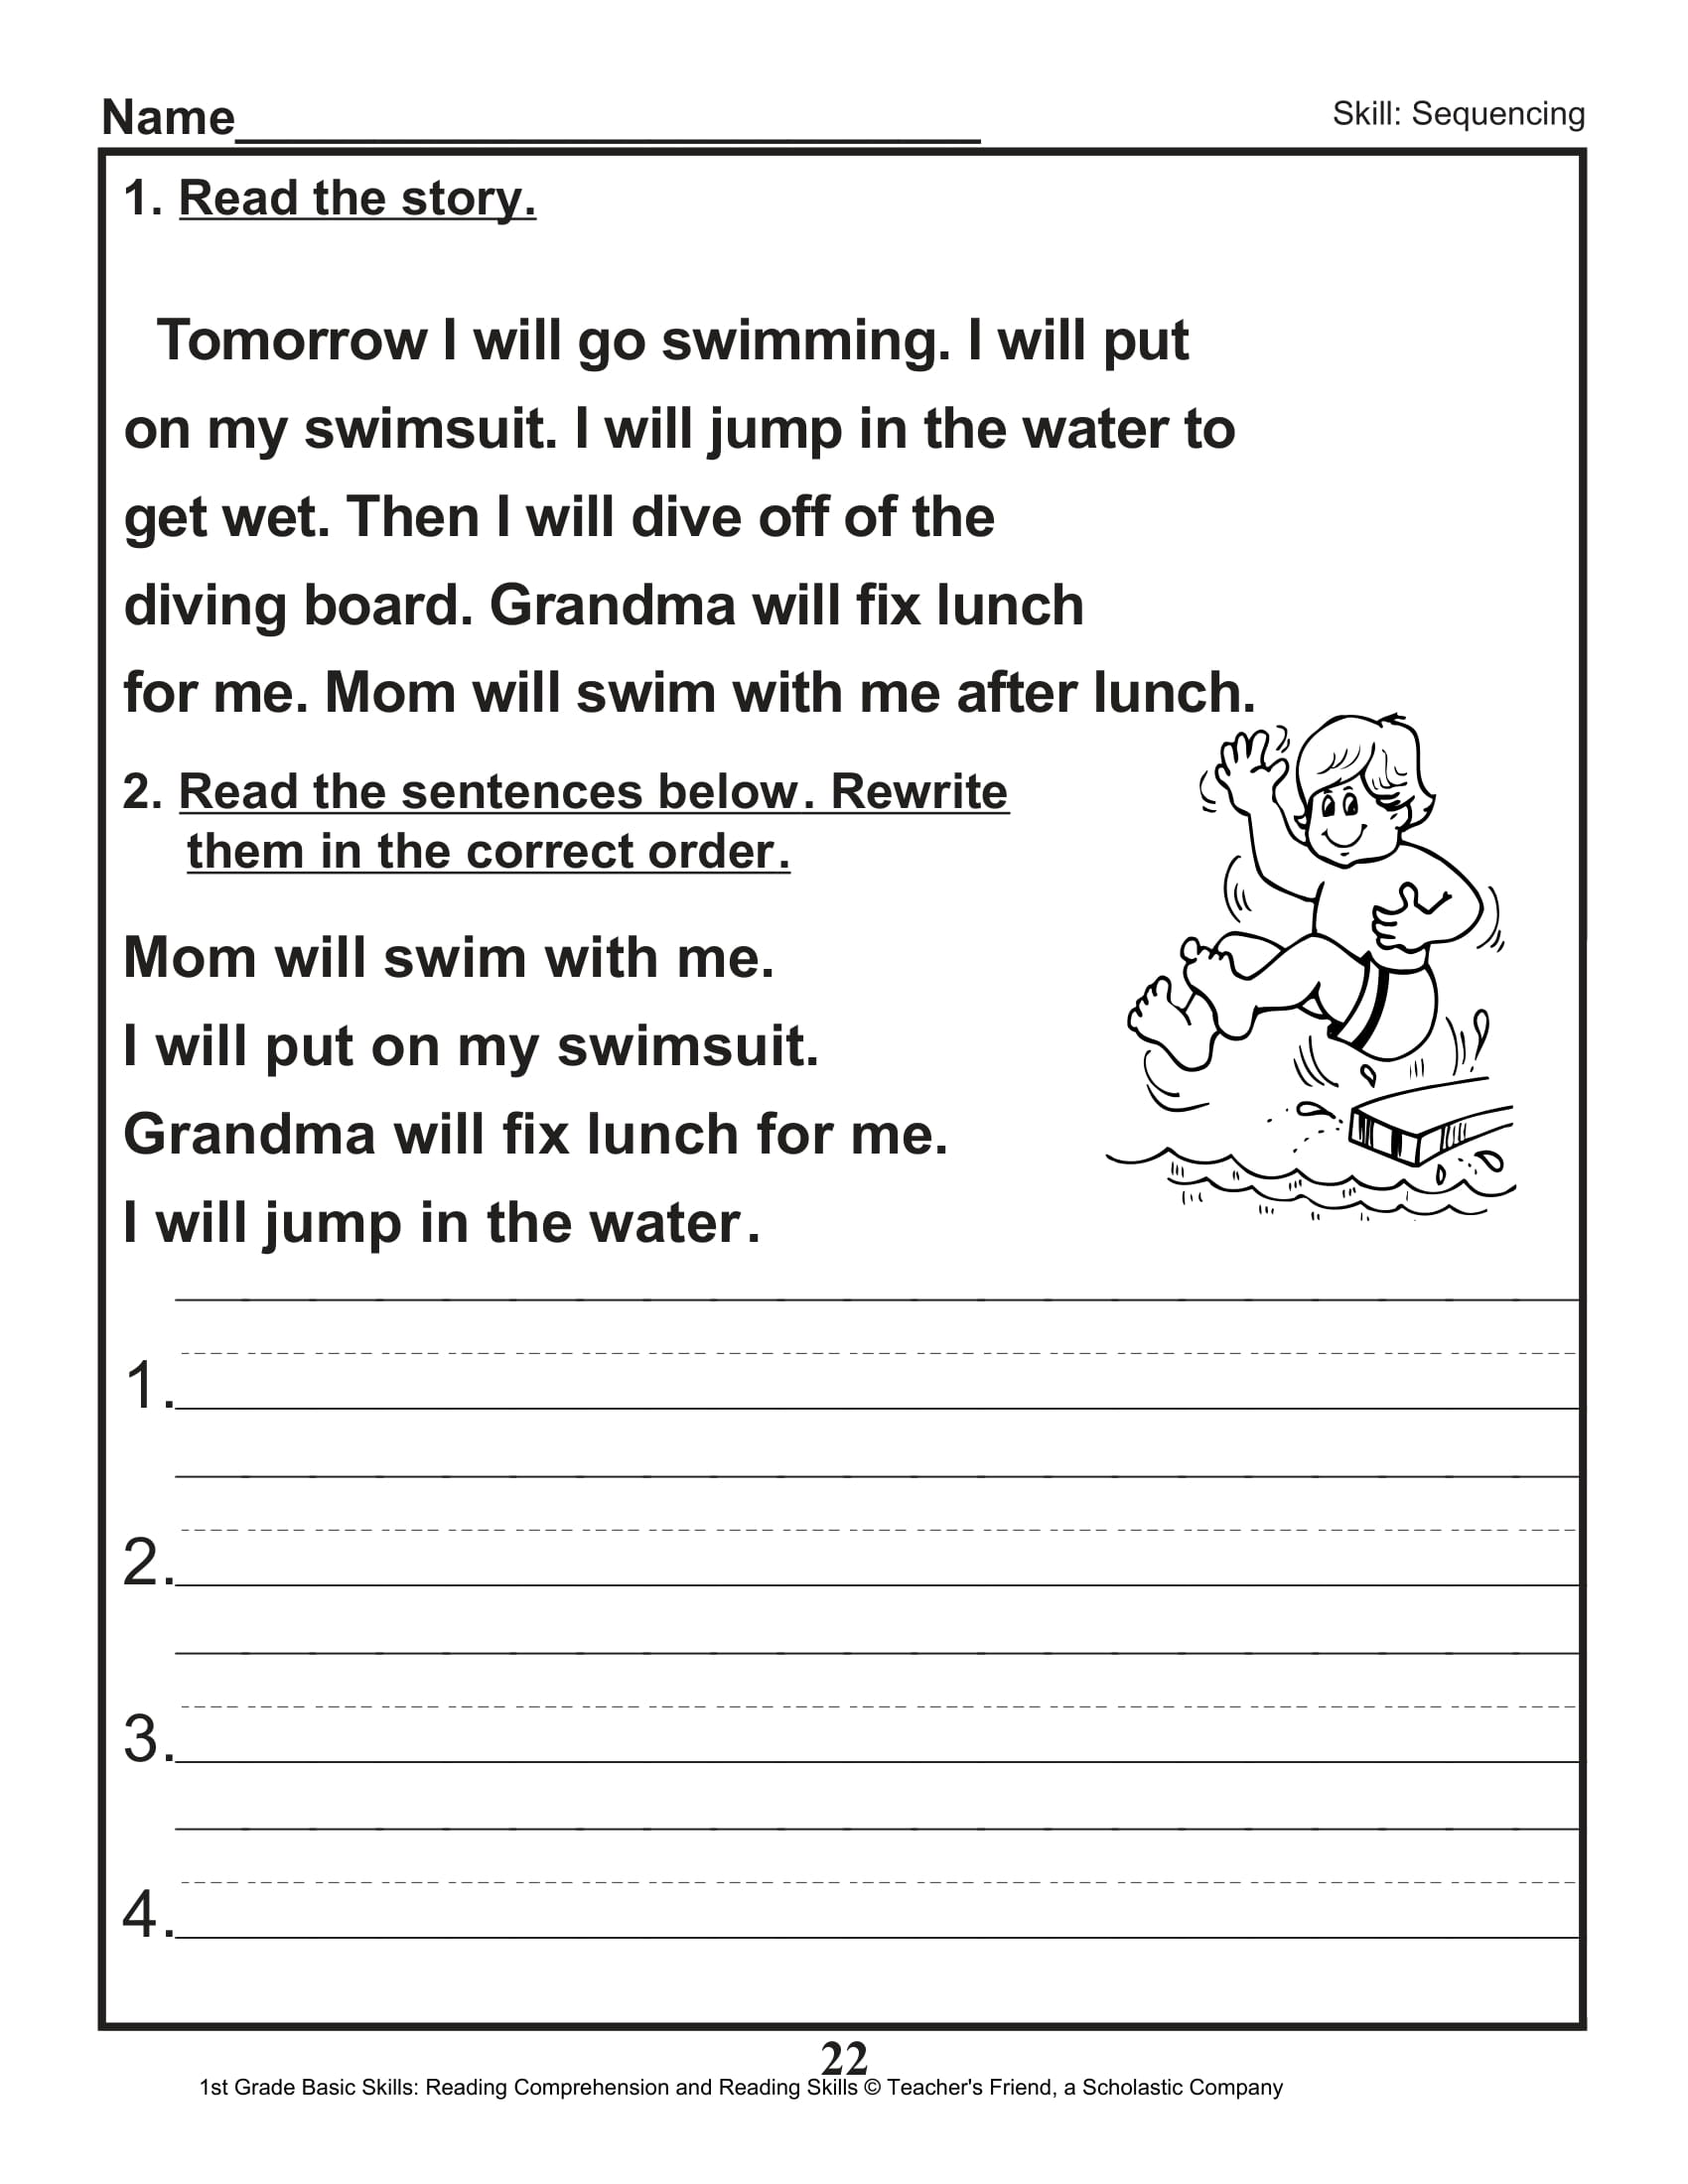 40 Scholastic 1st Grade Reading Comprehension Skills ...